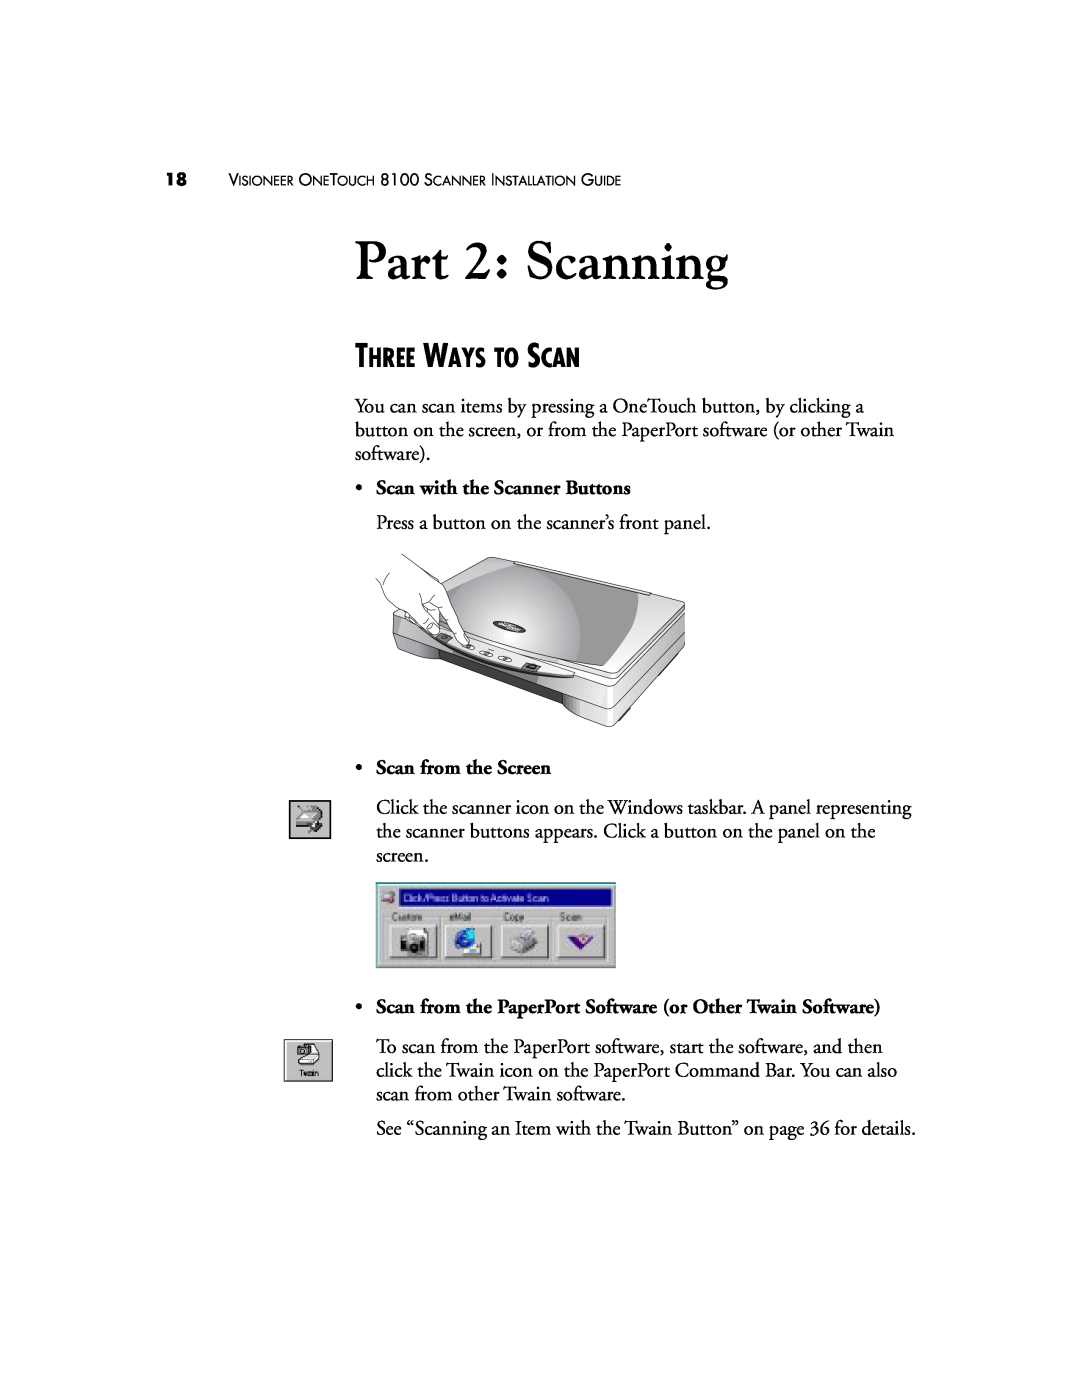 Visioneer 8100 manual Part 2 Scanning, Three Ways To Scan 